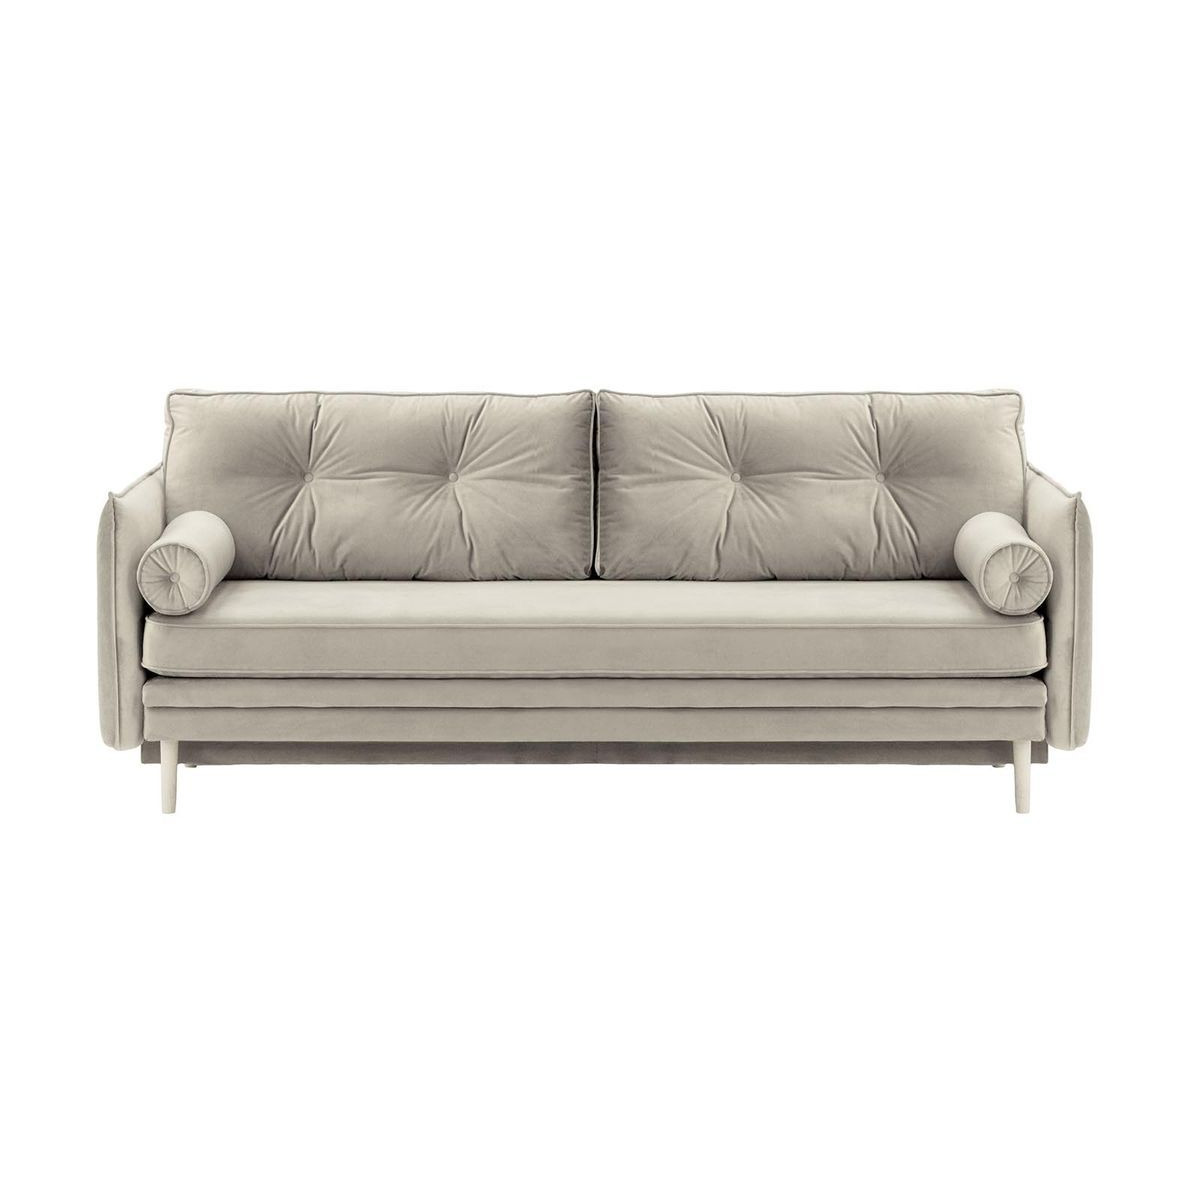 Darnet Sofa Bed with Storage, silver, Leg colour: white - image 1